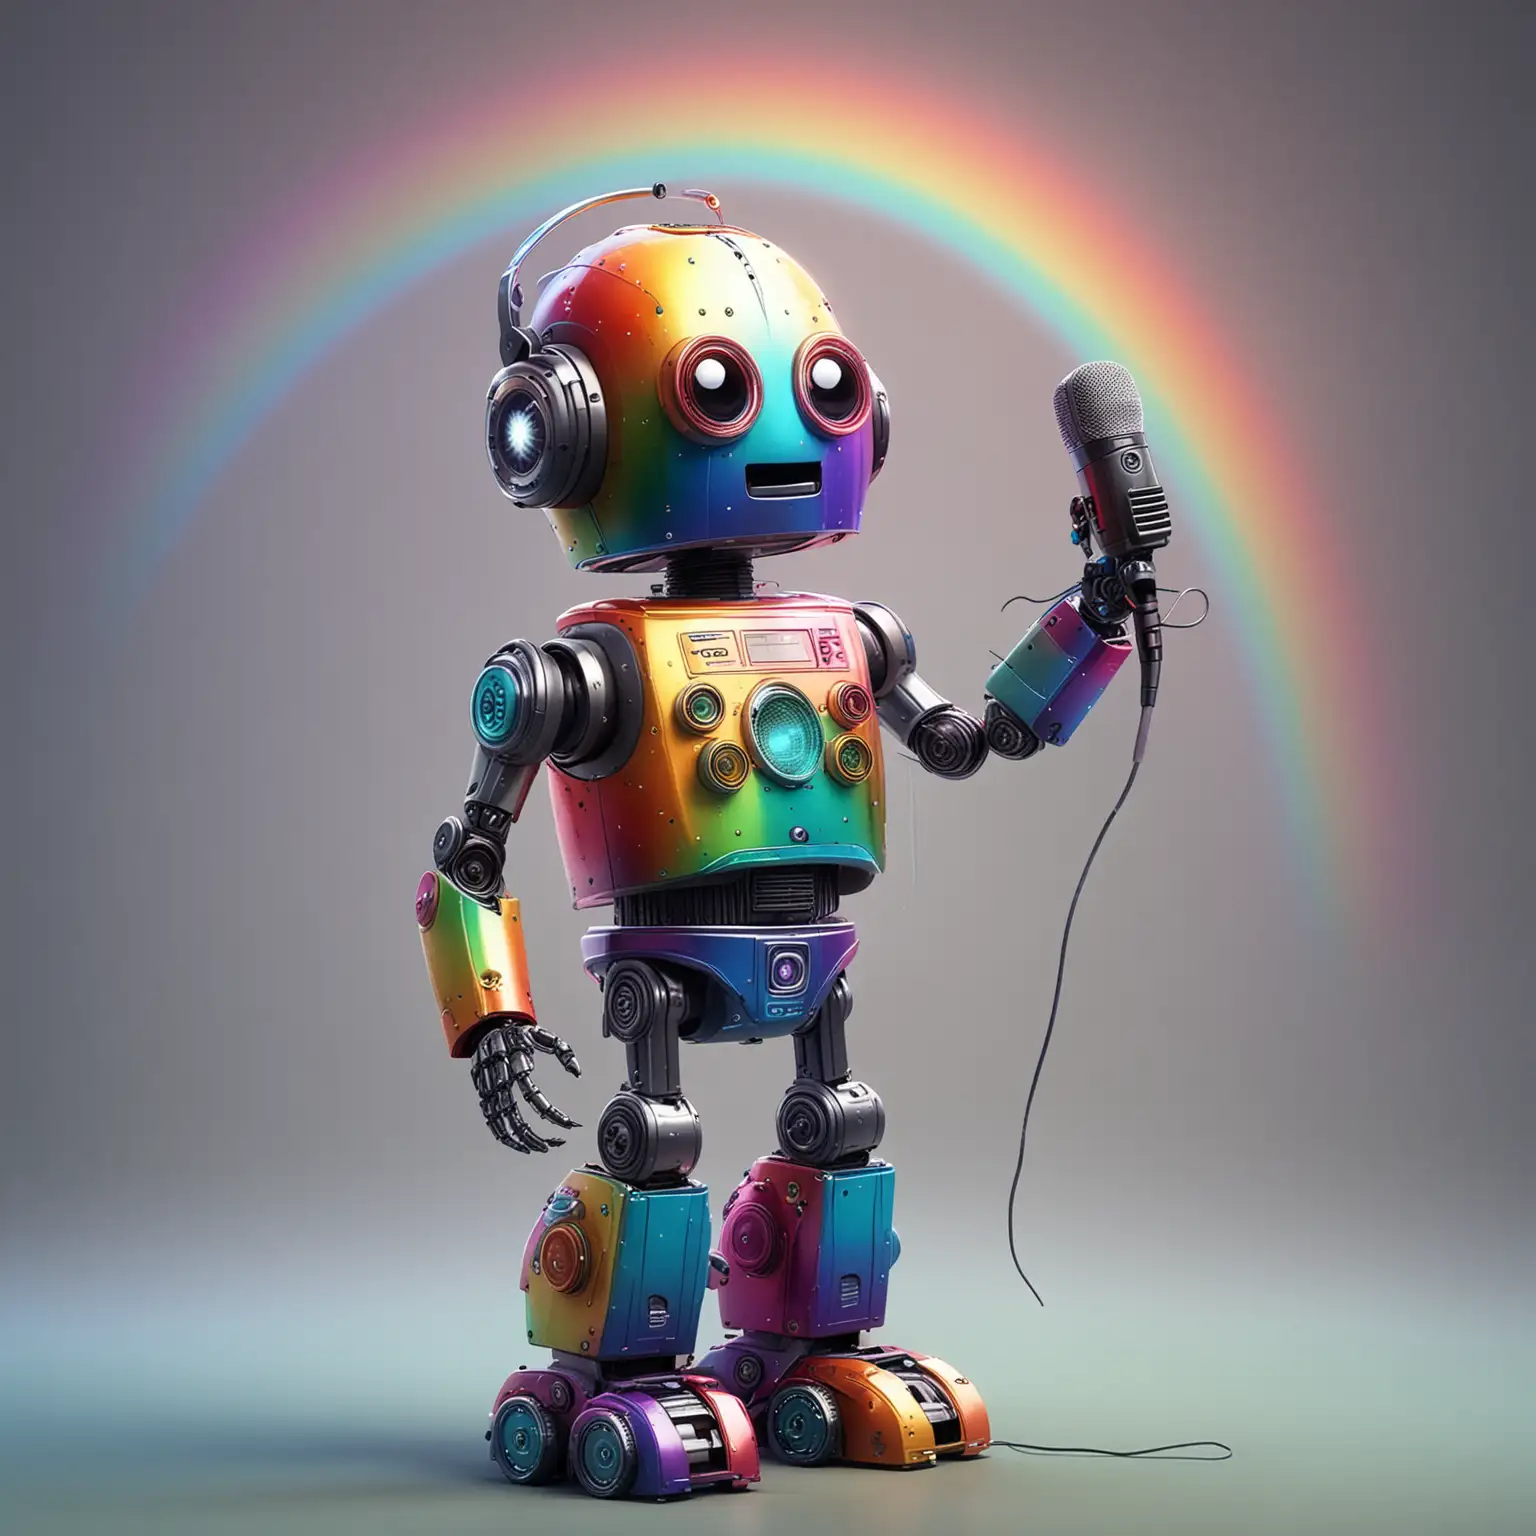 Colorful Robot Singing Karaoke Under a Vibrant Rainbow